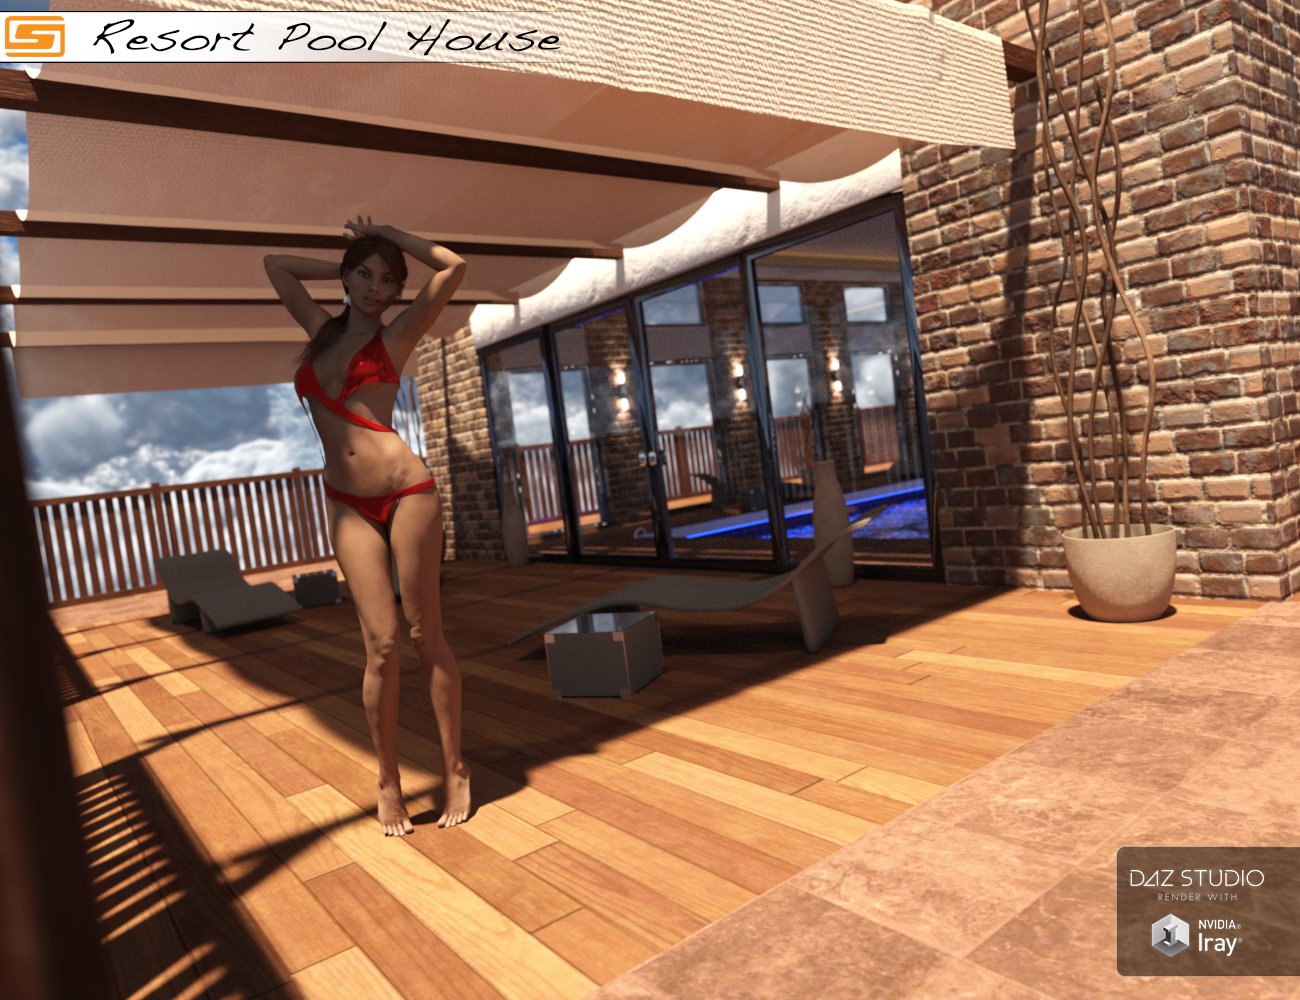 Resort Pool House